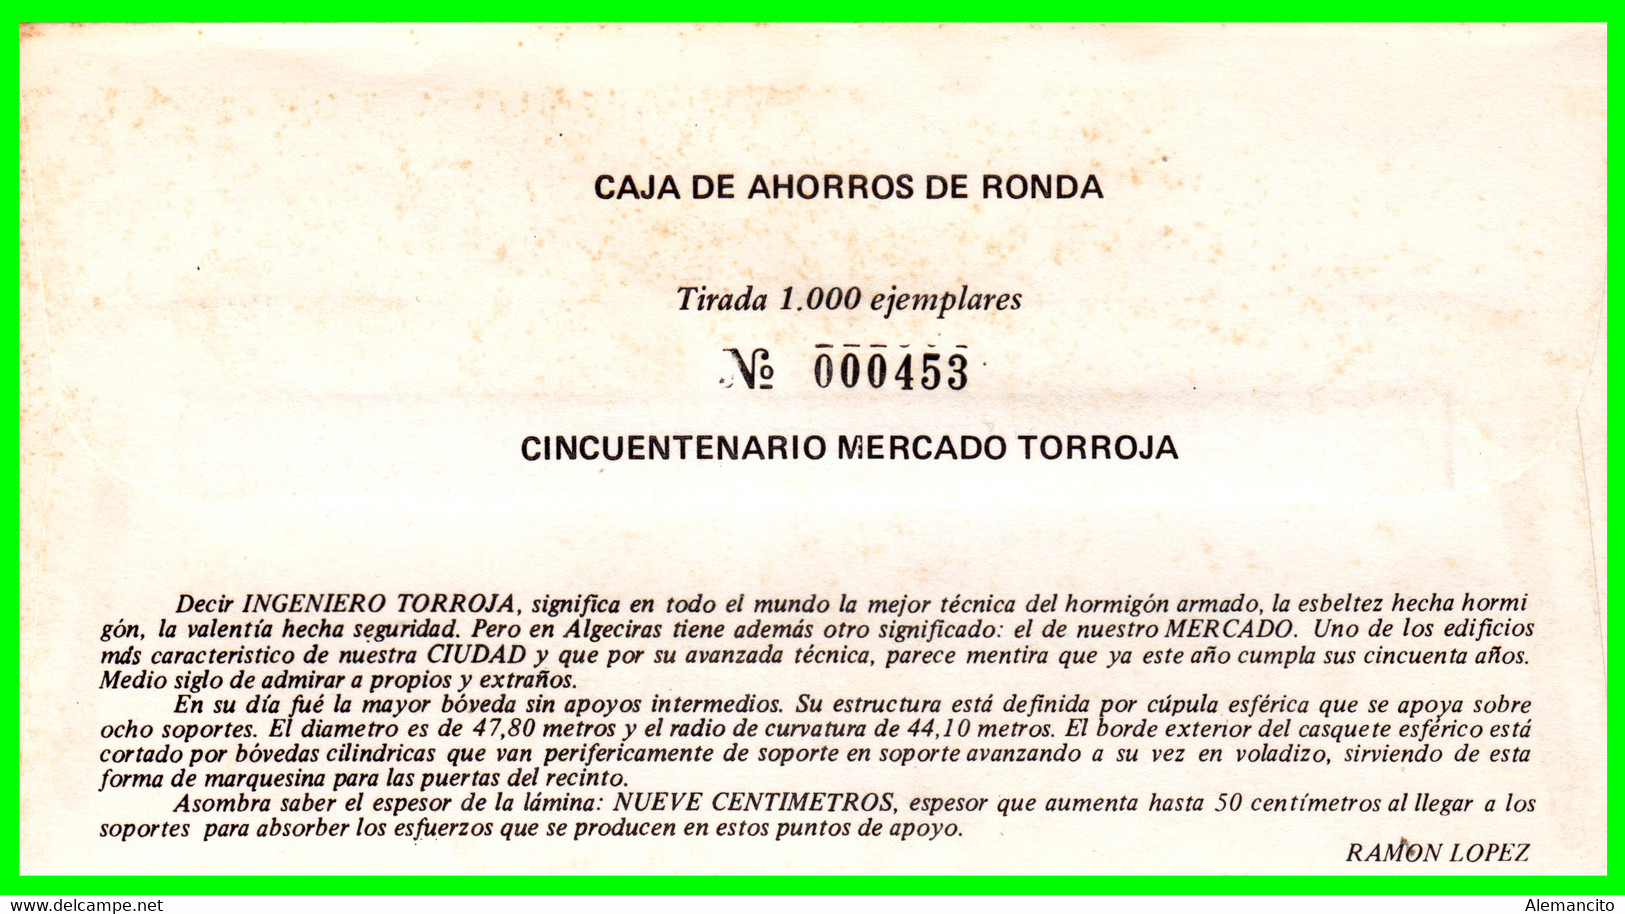 SOBRE EXPOSICION FILATELICA Y NUMISMATICA DE ALGECIRAS ( CADIZ ) MATASELLO DE ALGECIRAS AÑO 1985 - Altri & Non Classificati